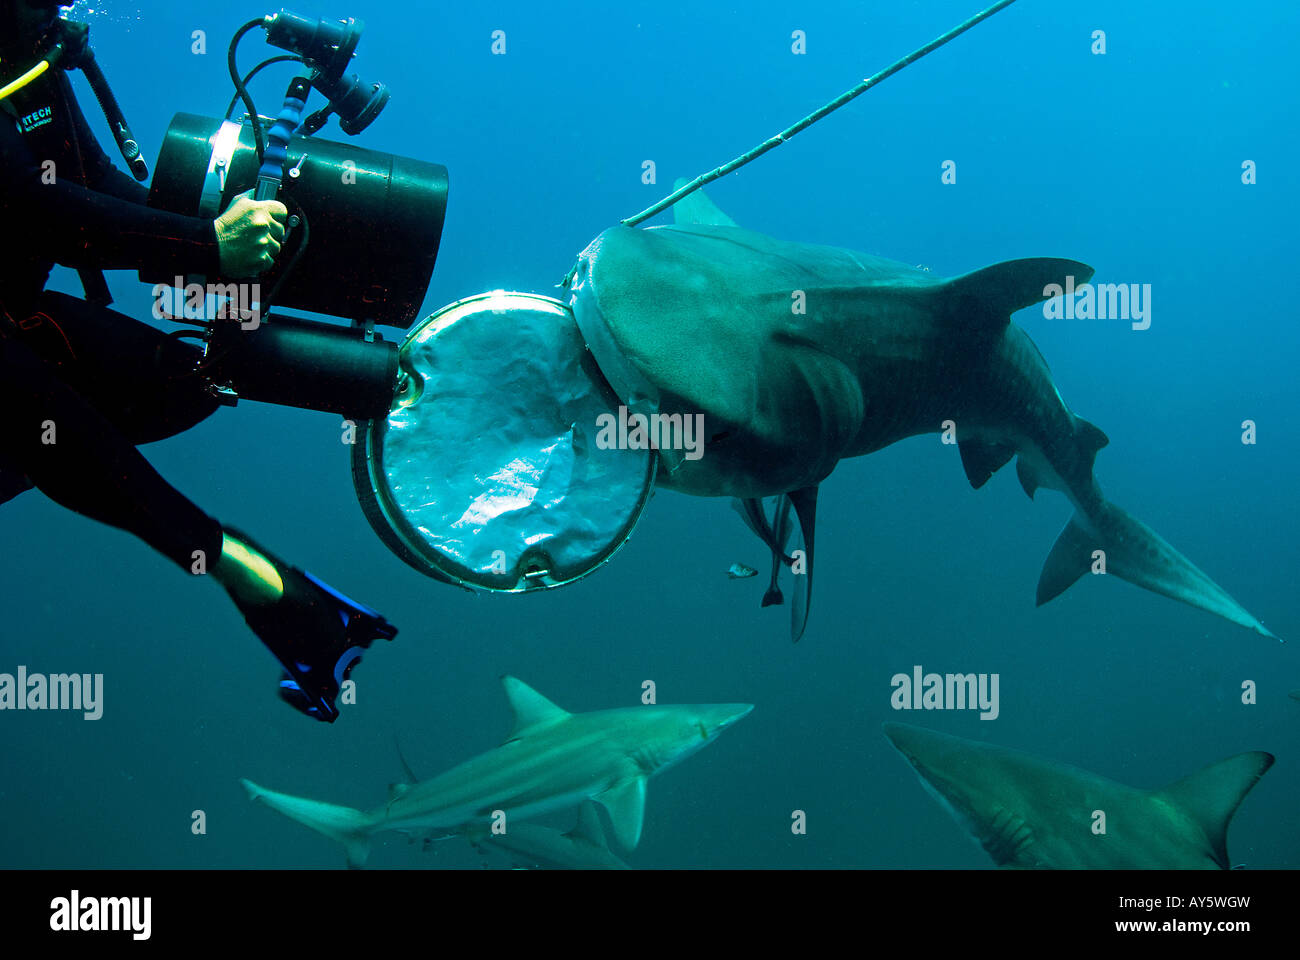 i'm hungry! Tiger shark, Aliwal Shoal, South Africa Stock Photo